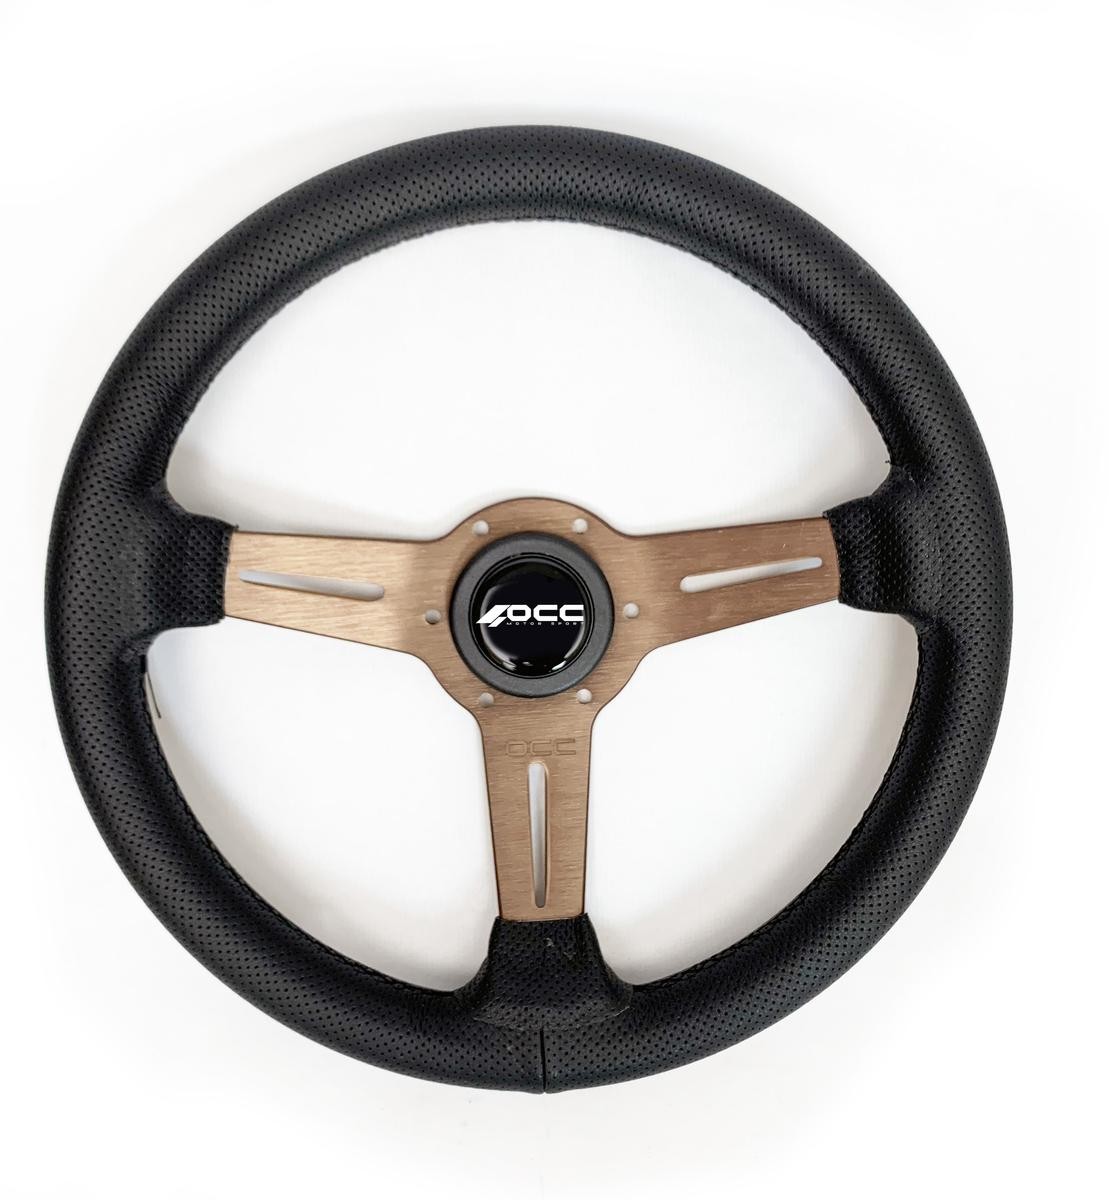 Porsche Sports steering wheel Occ Motorsport OCCVOL009 at a good price